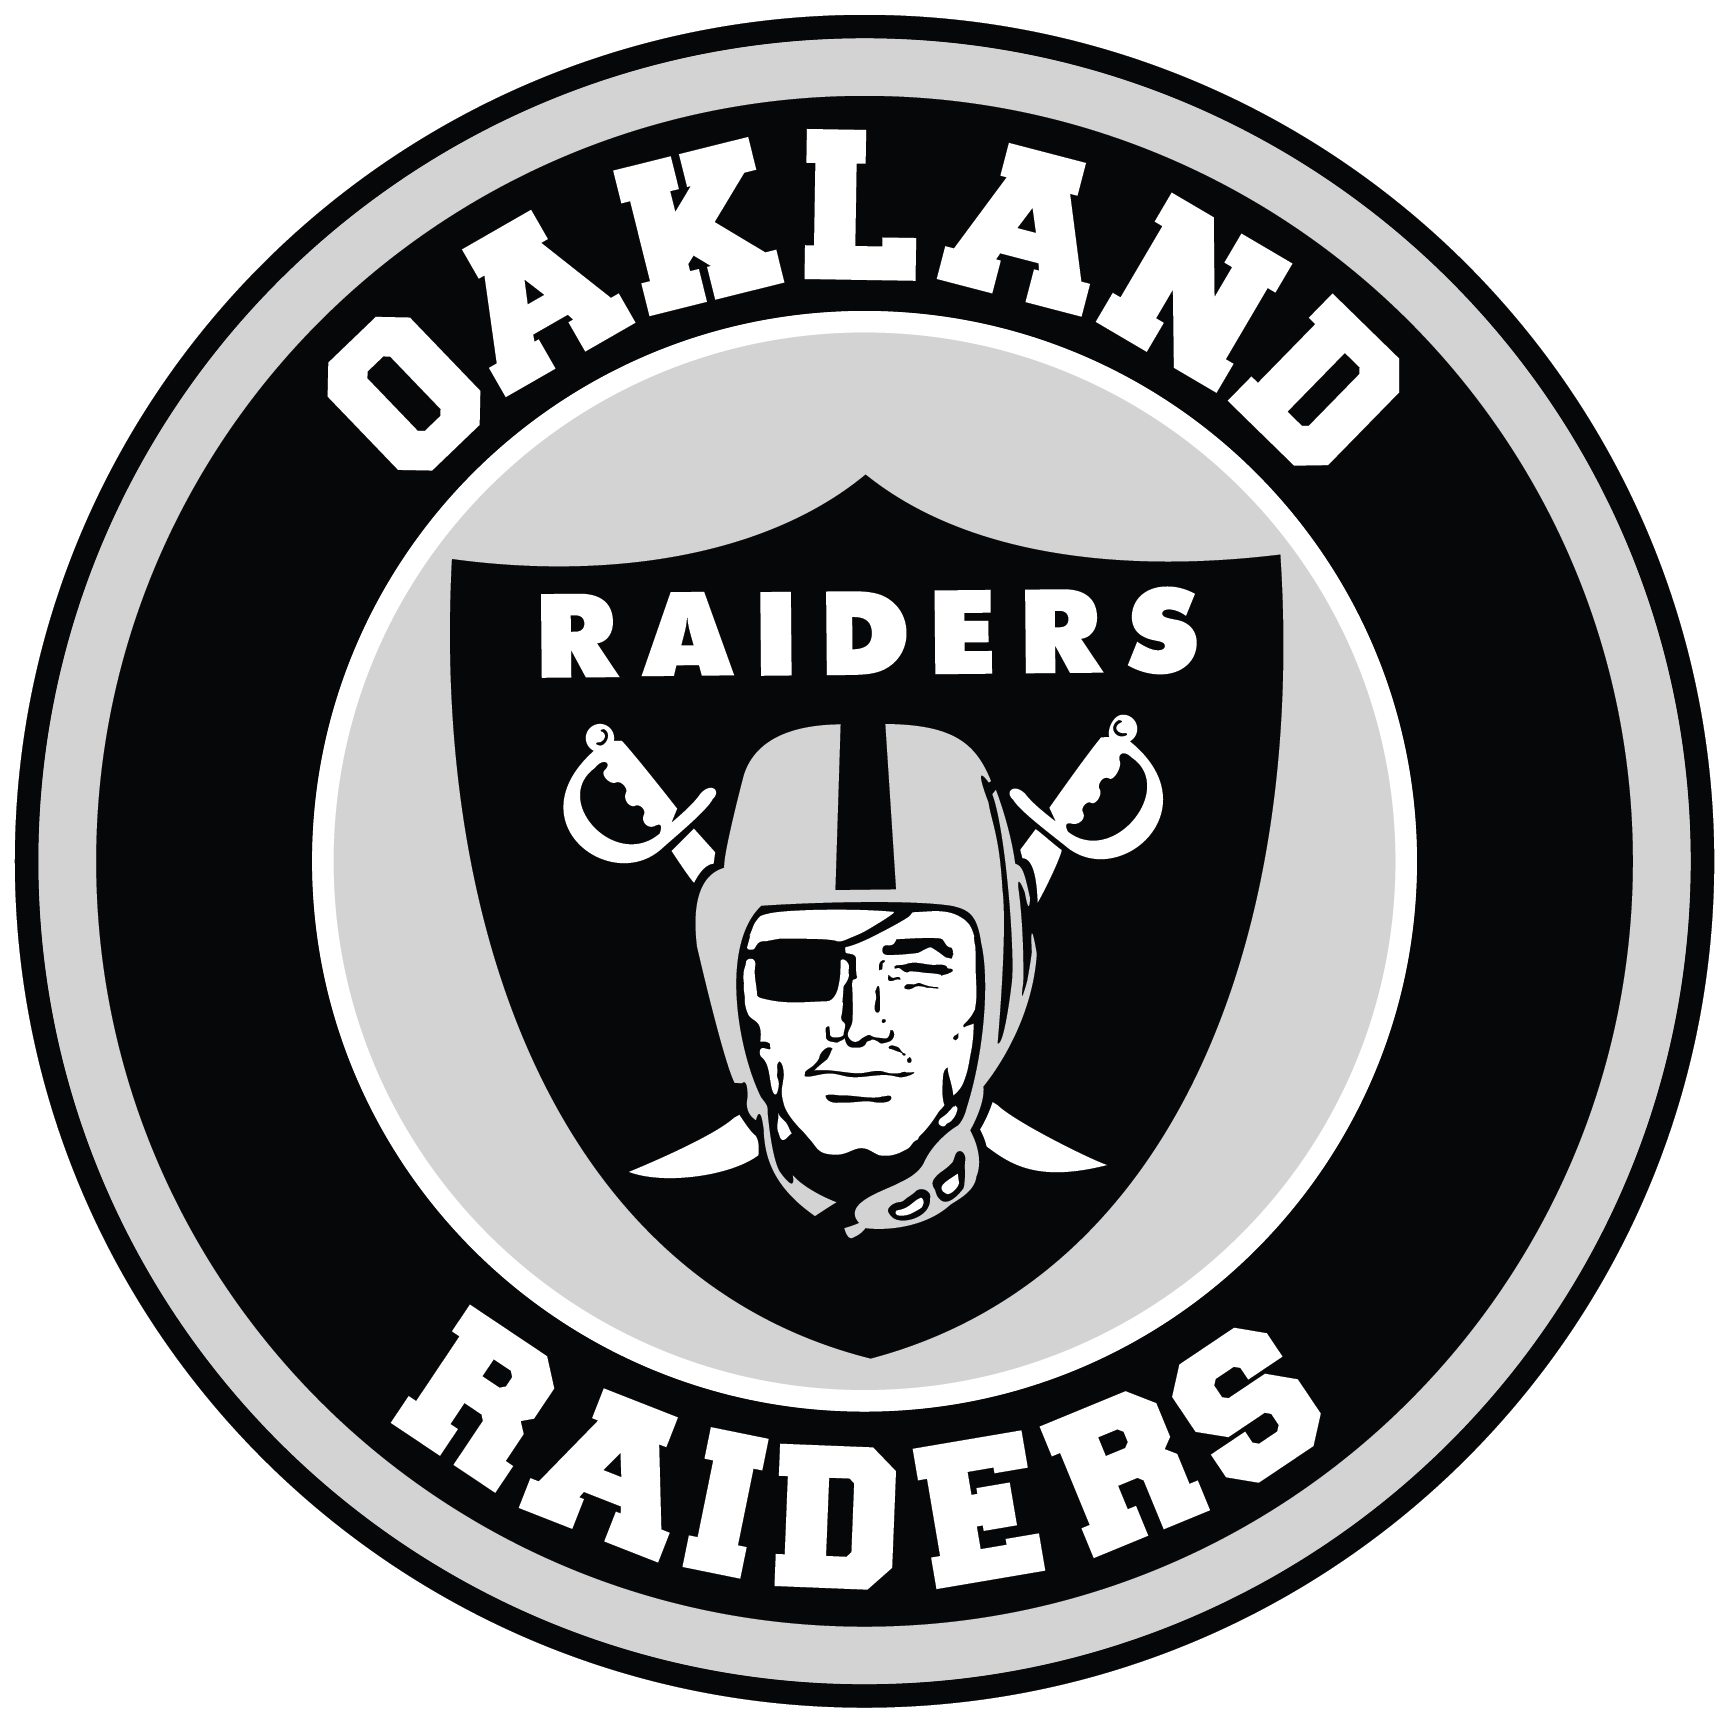 Raiders Logo PNG Image